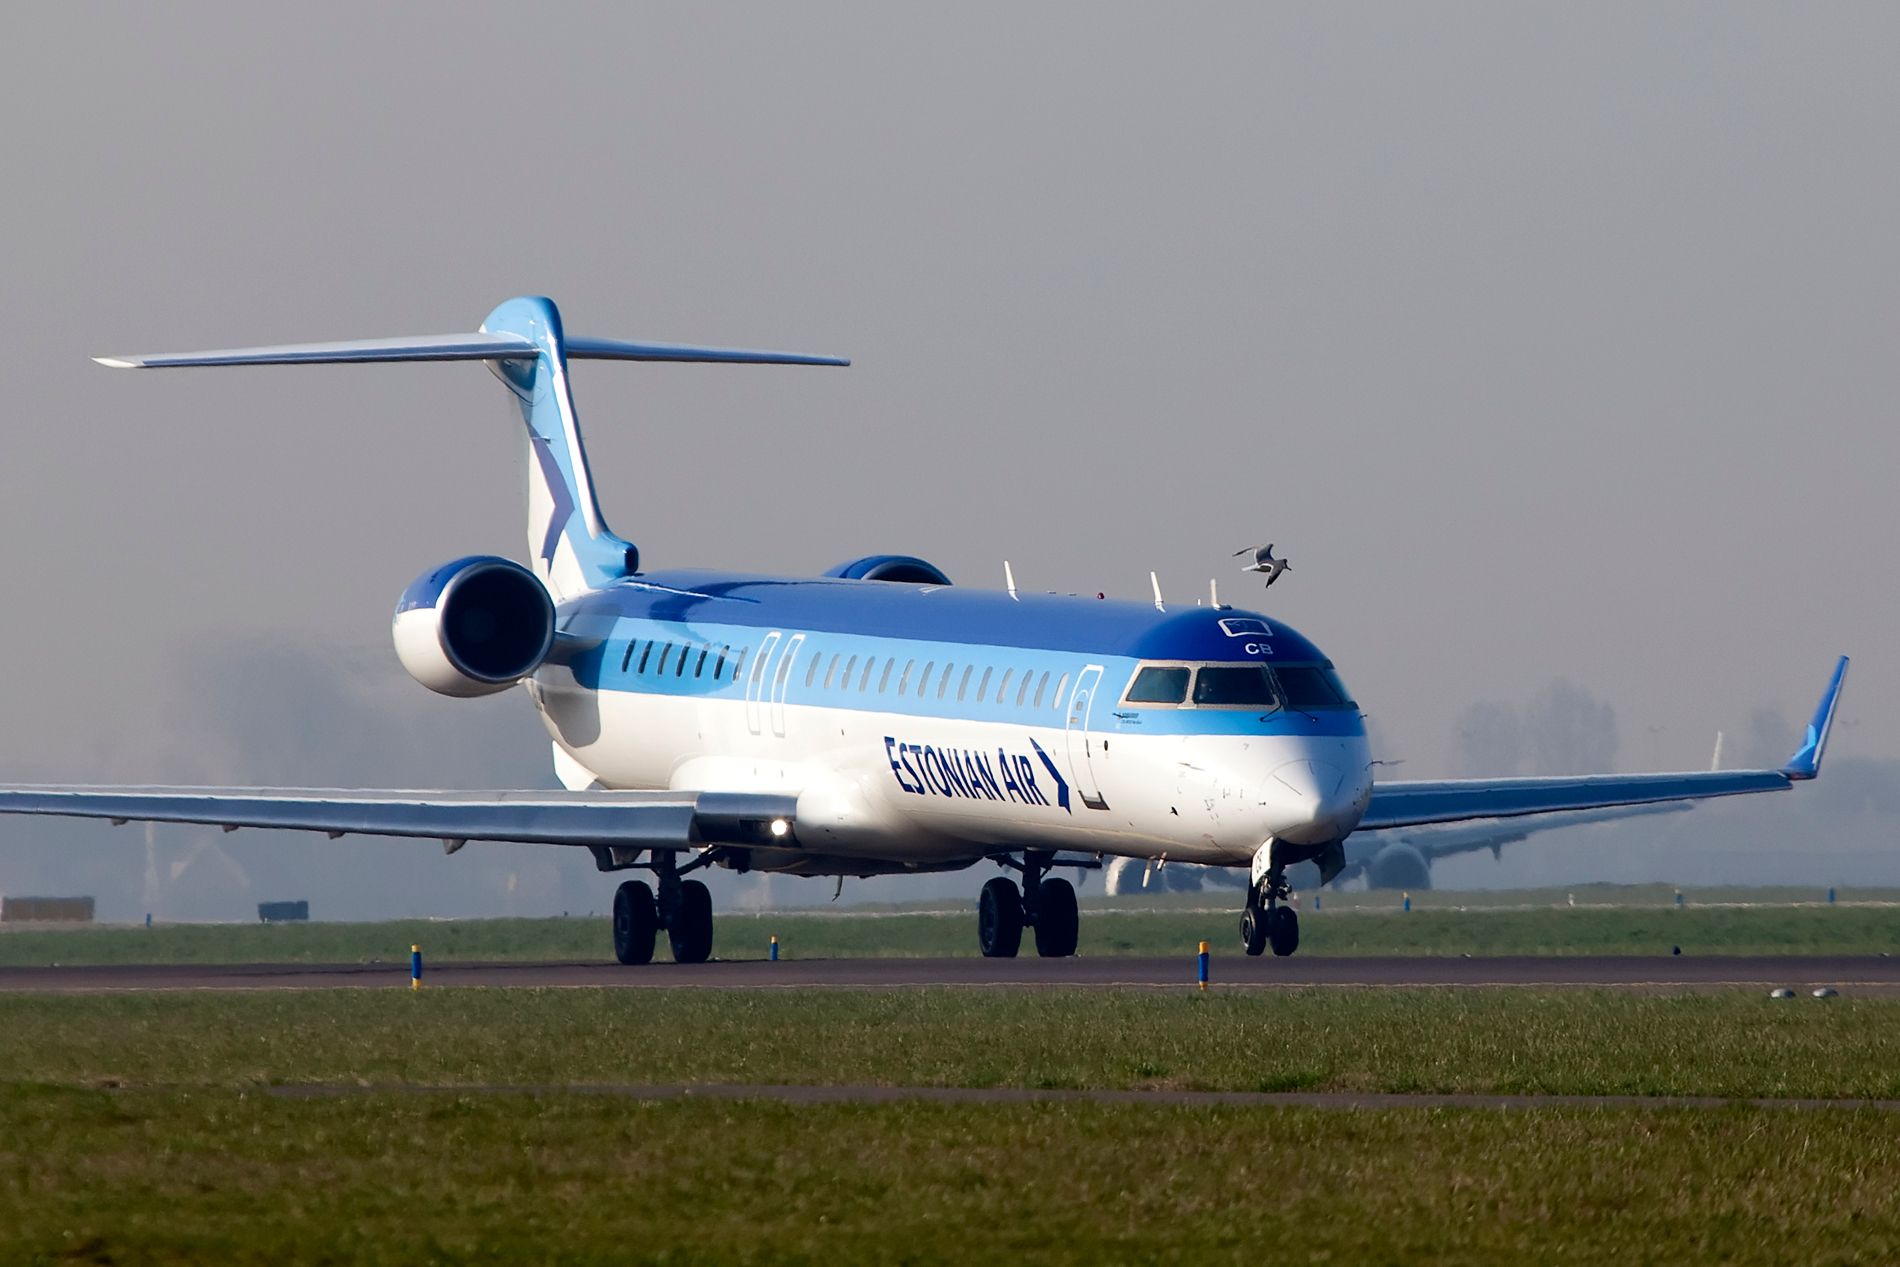 An Estonian Air Bombardier CRJ900 jet